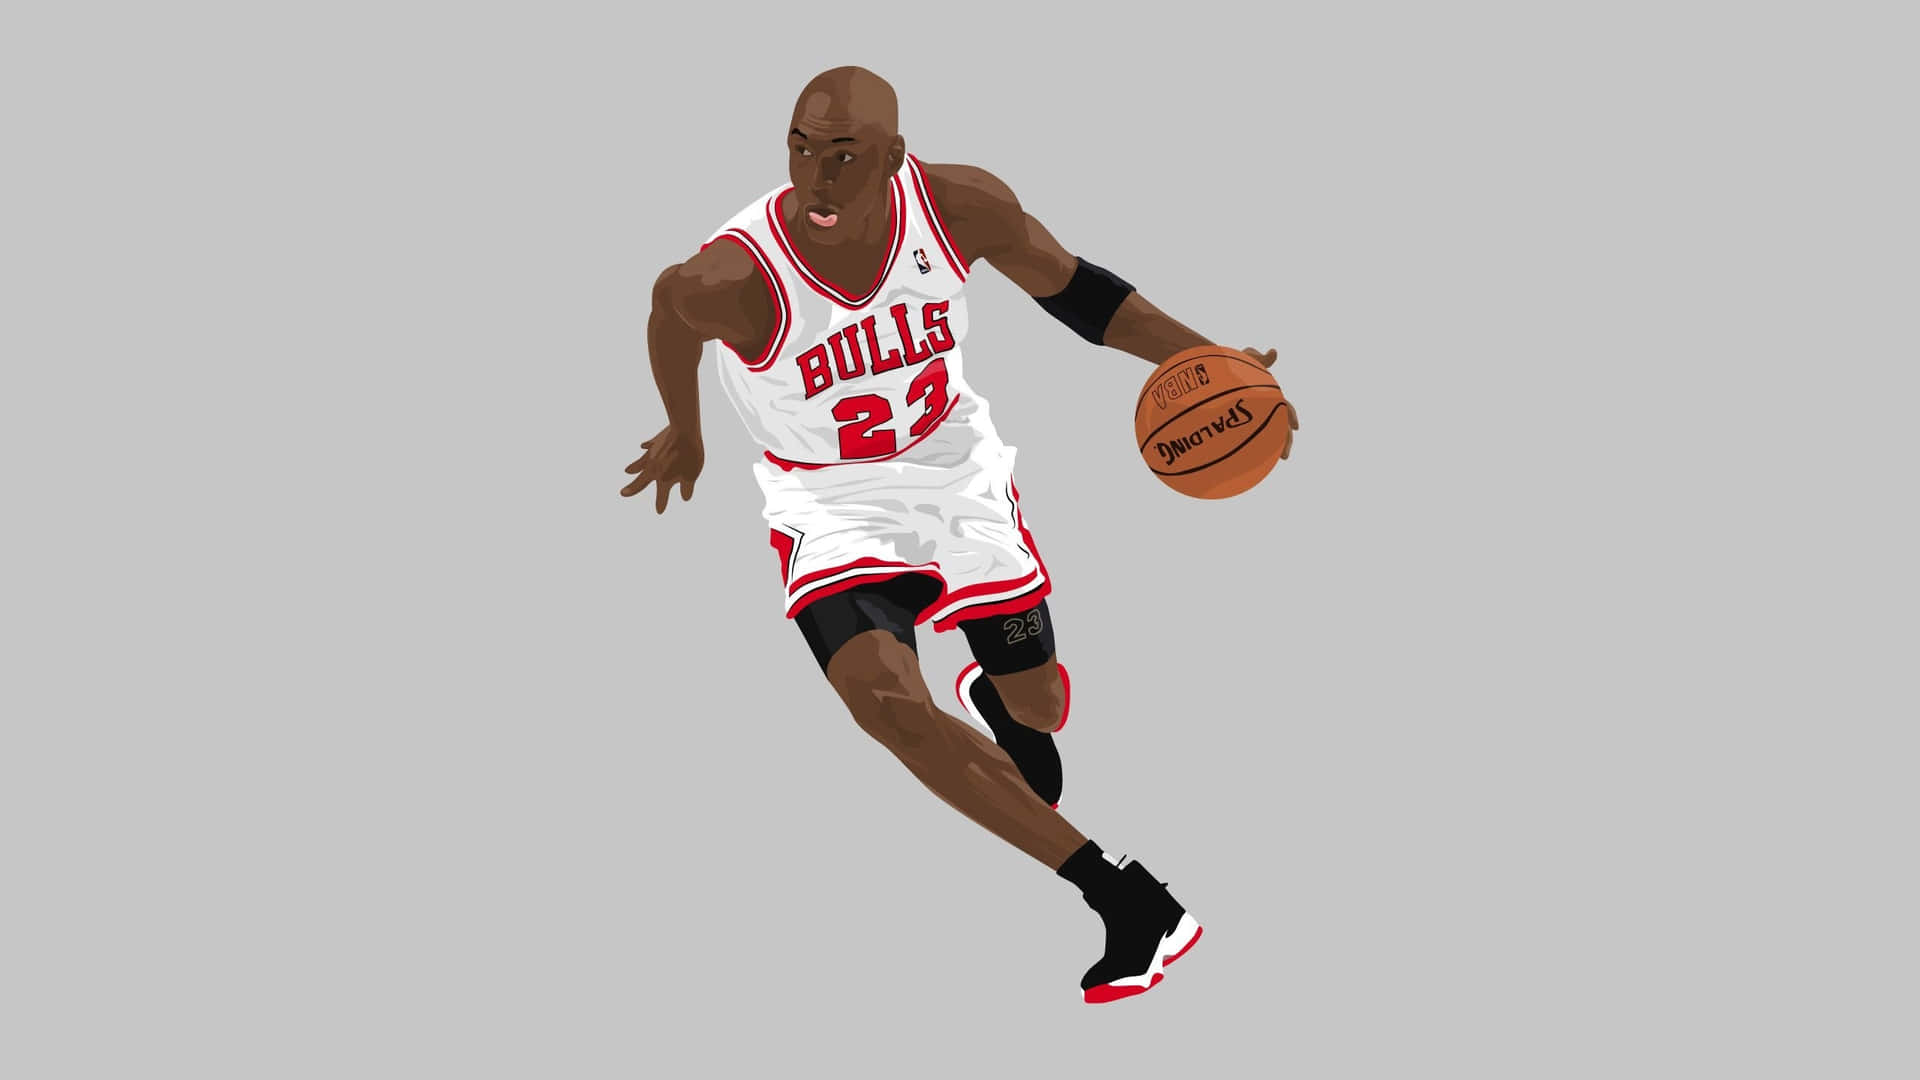 Michael Jordan lover mod kanten under en basketball kamp. Wallpaper